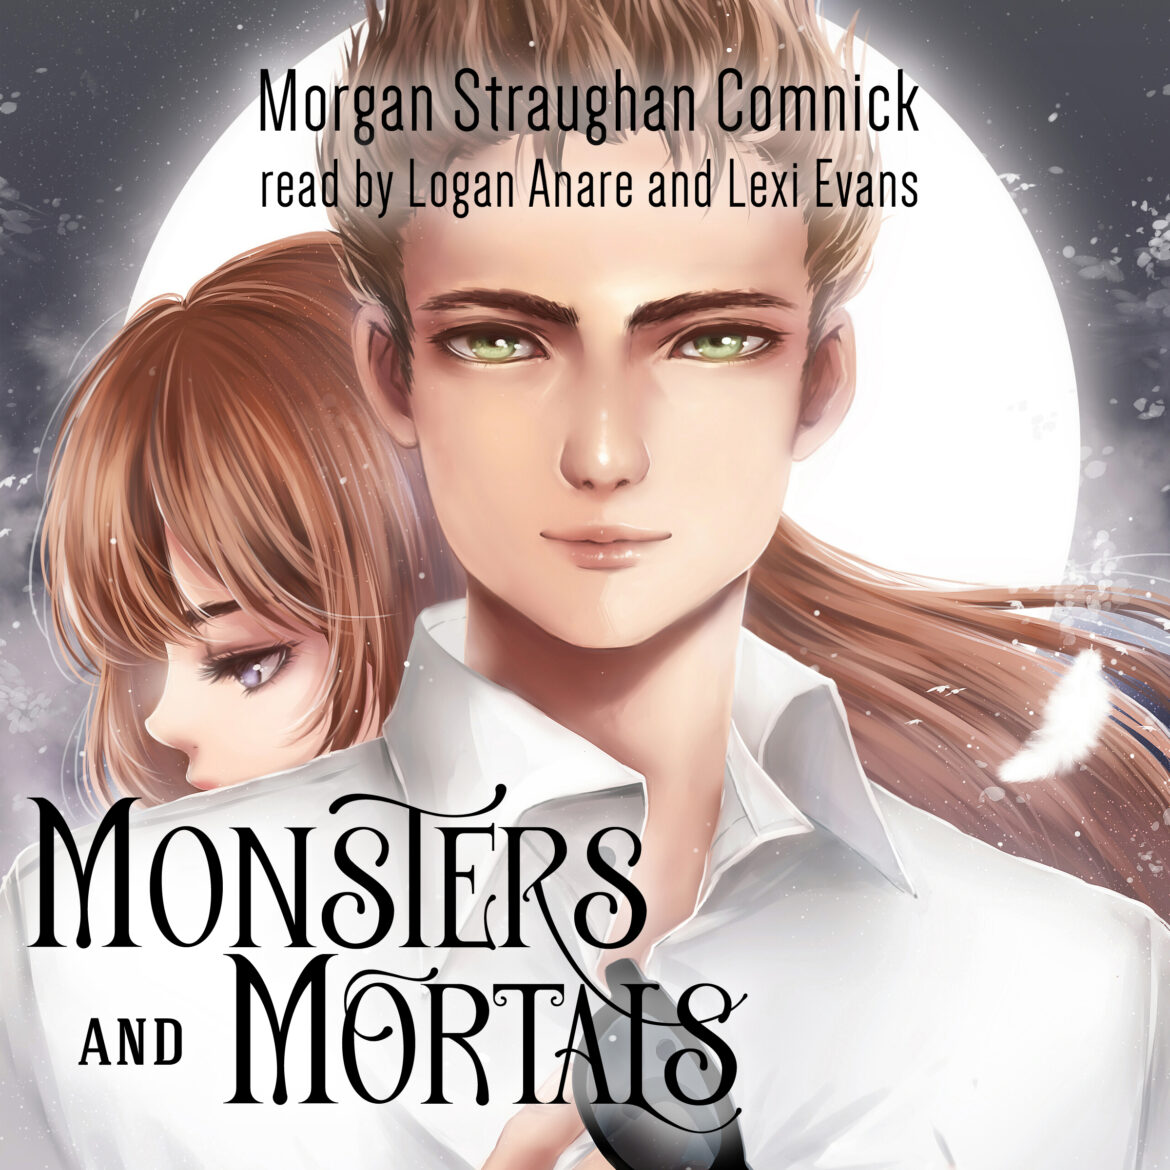 10 Days Left on Monsters and Mortals Audiobook Kickstarter